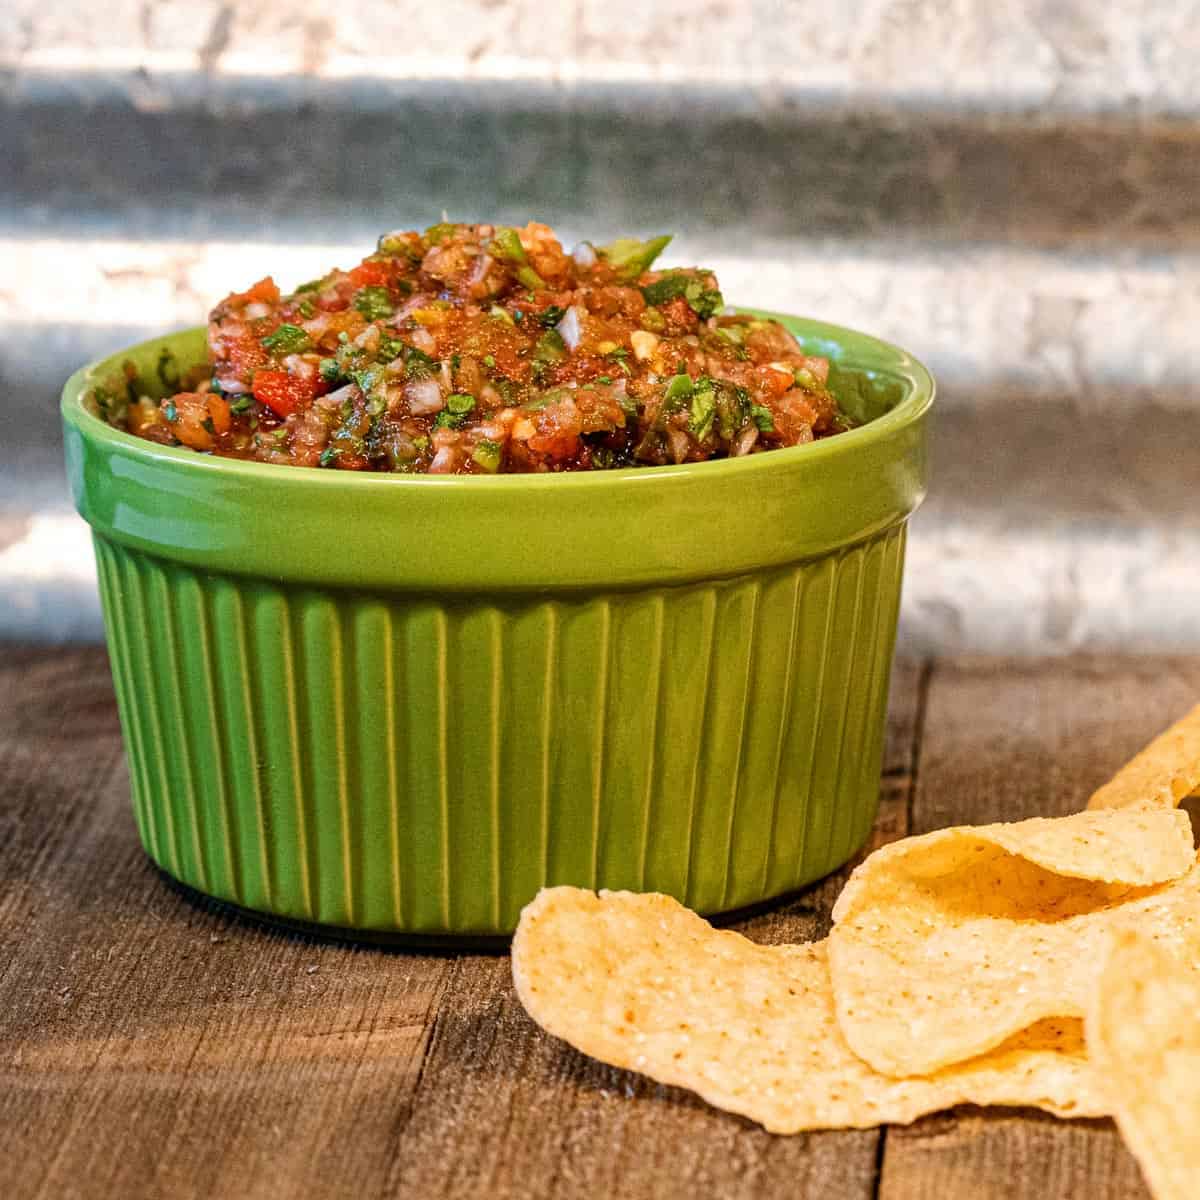 Restaurant style salsa in a green dish.